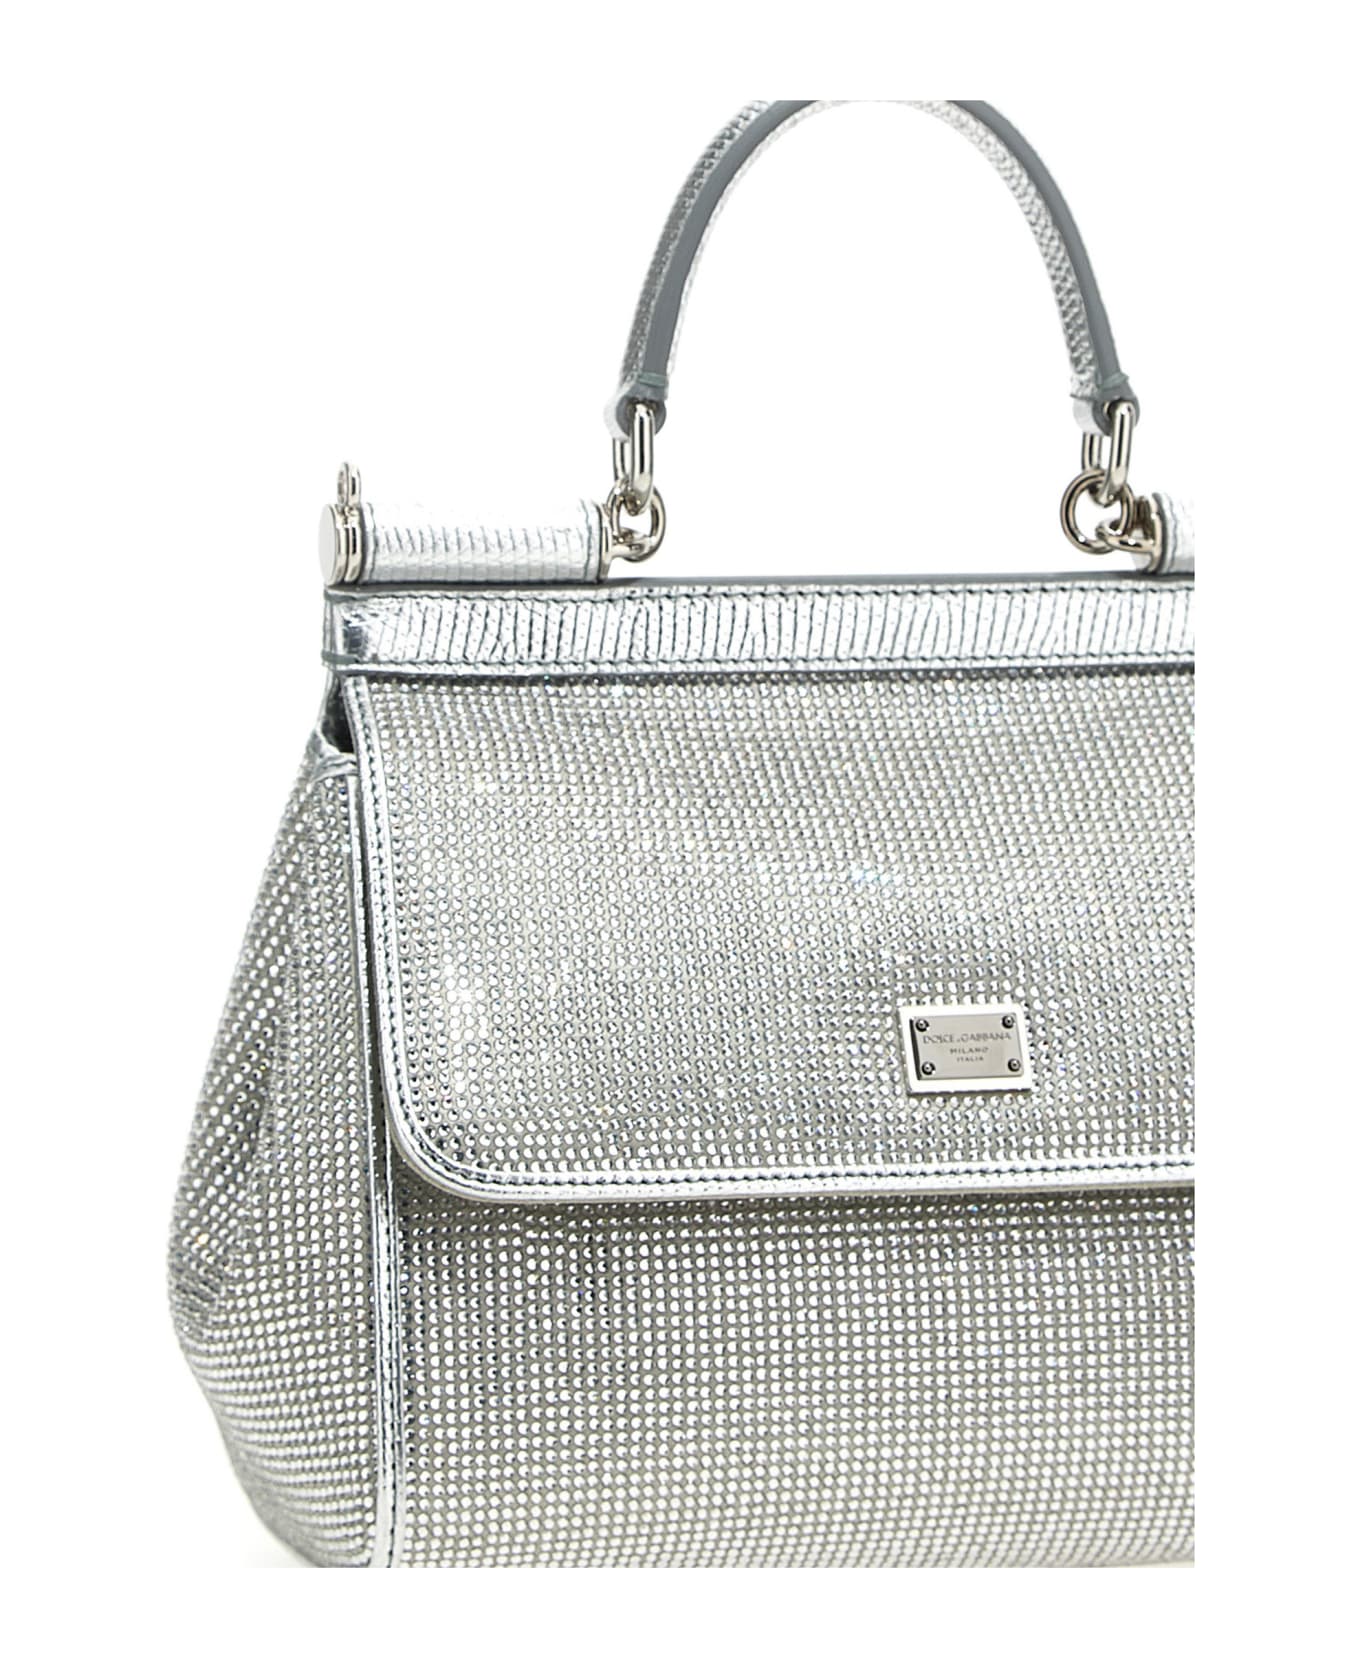 Dolce & Gabbana 'sicily' Small Handbag - Silver